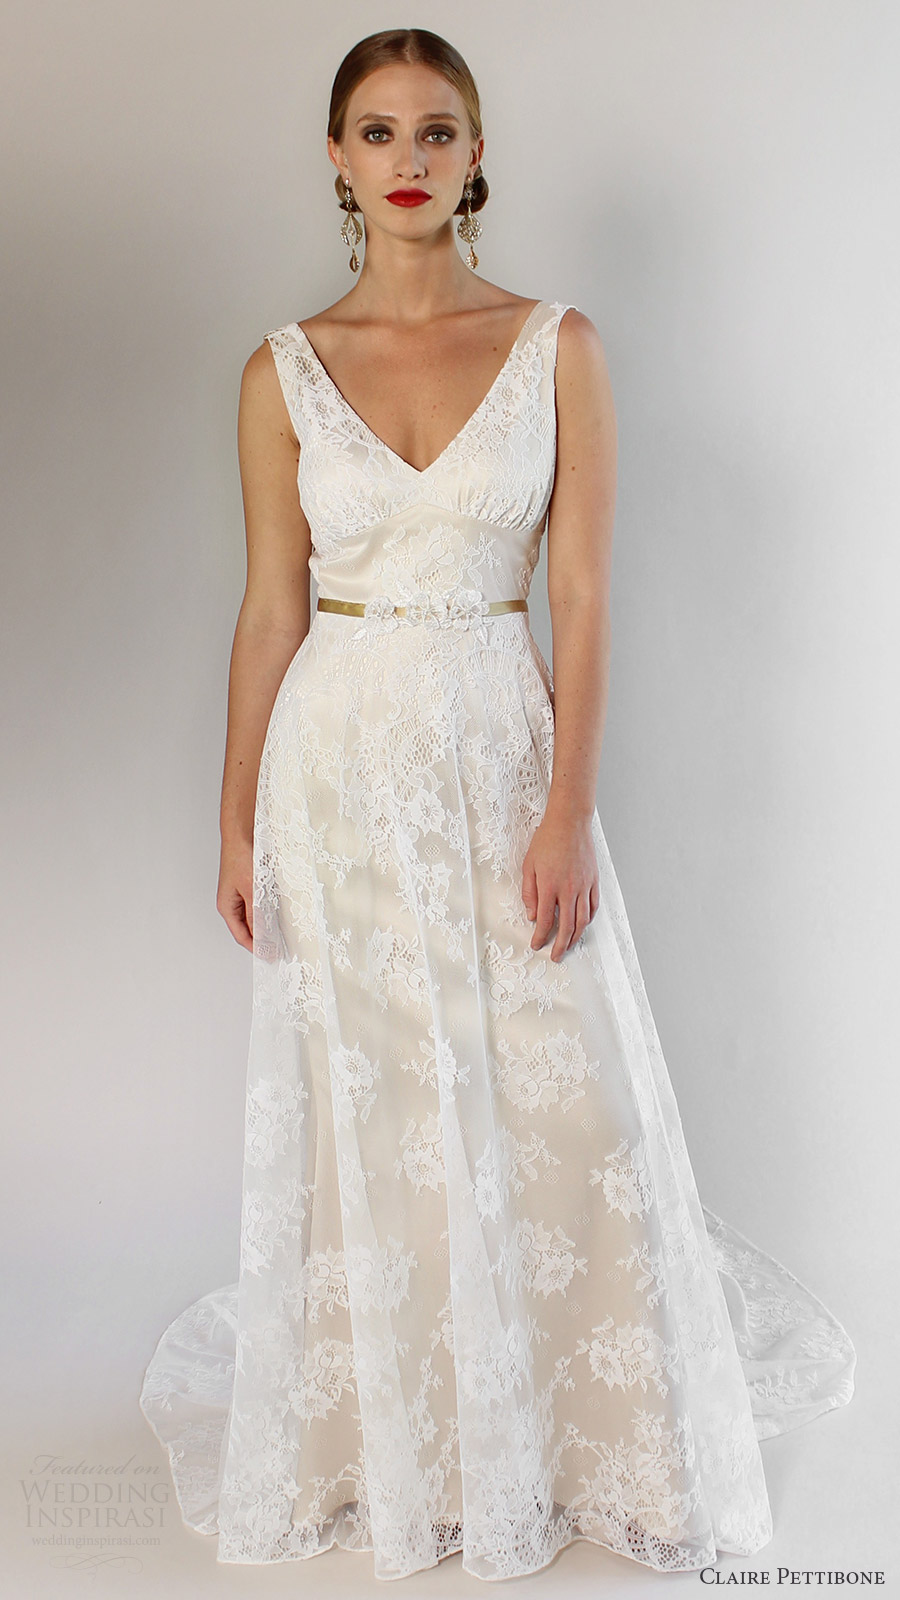 claire pettibone bridal spring 2017 sleeveless straps vneck aline lace wedding dress (palisades) mv romantic